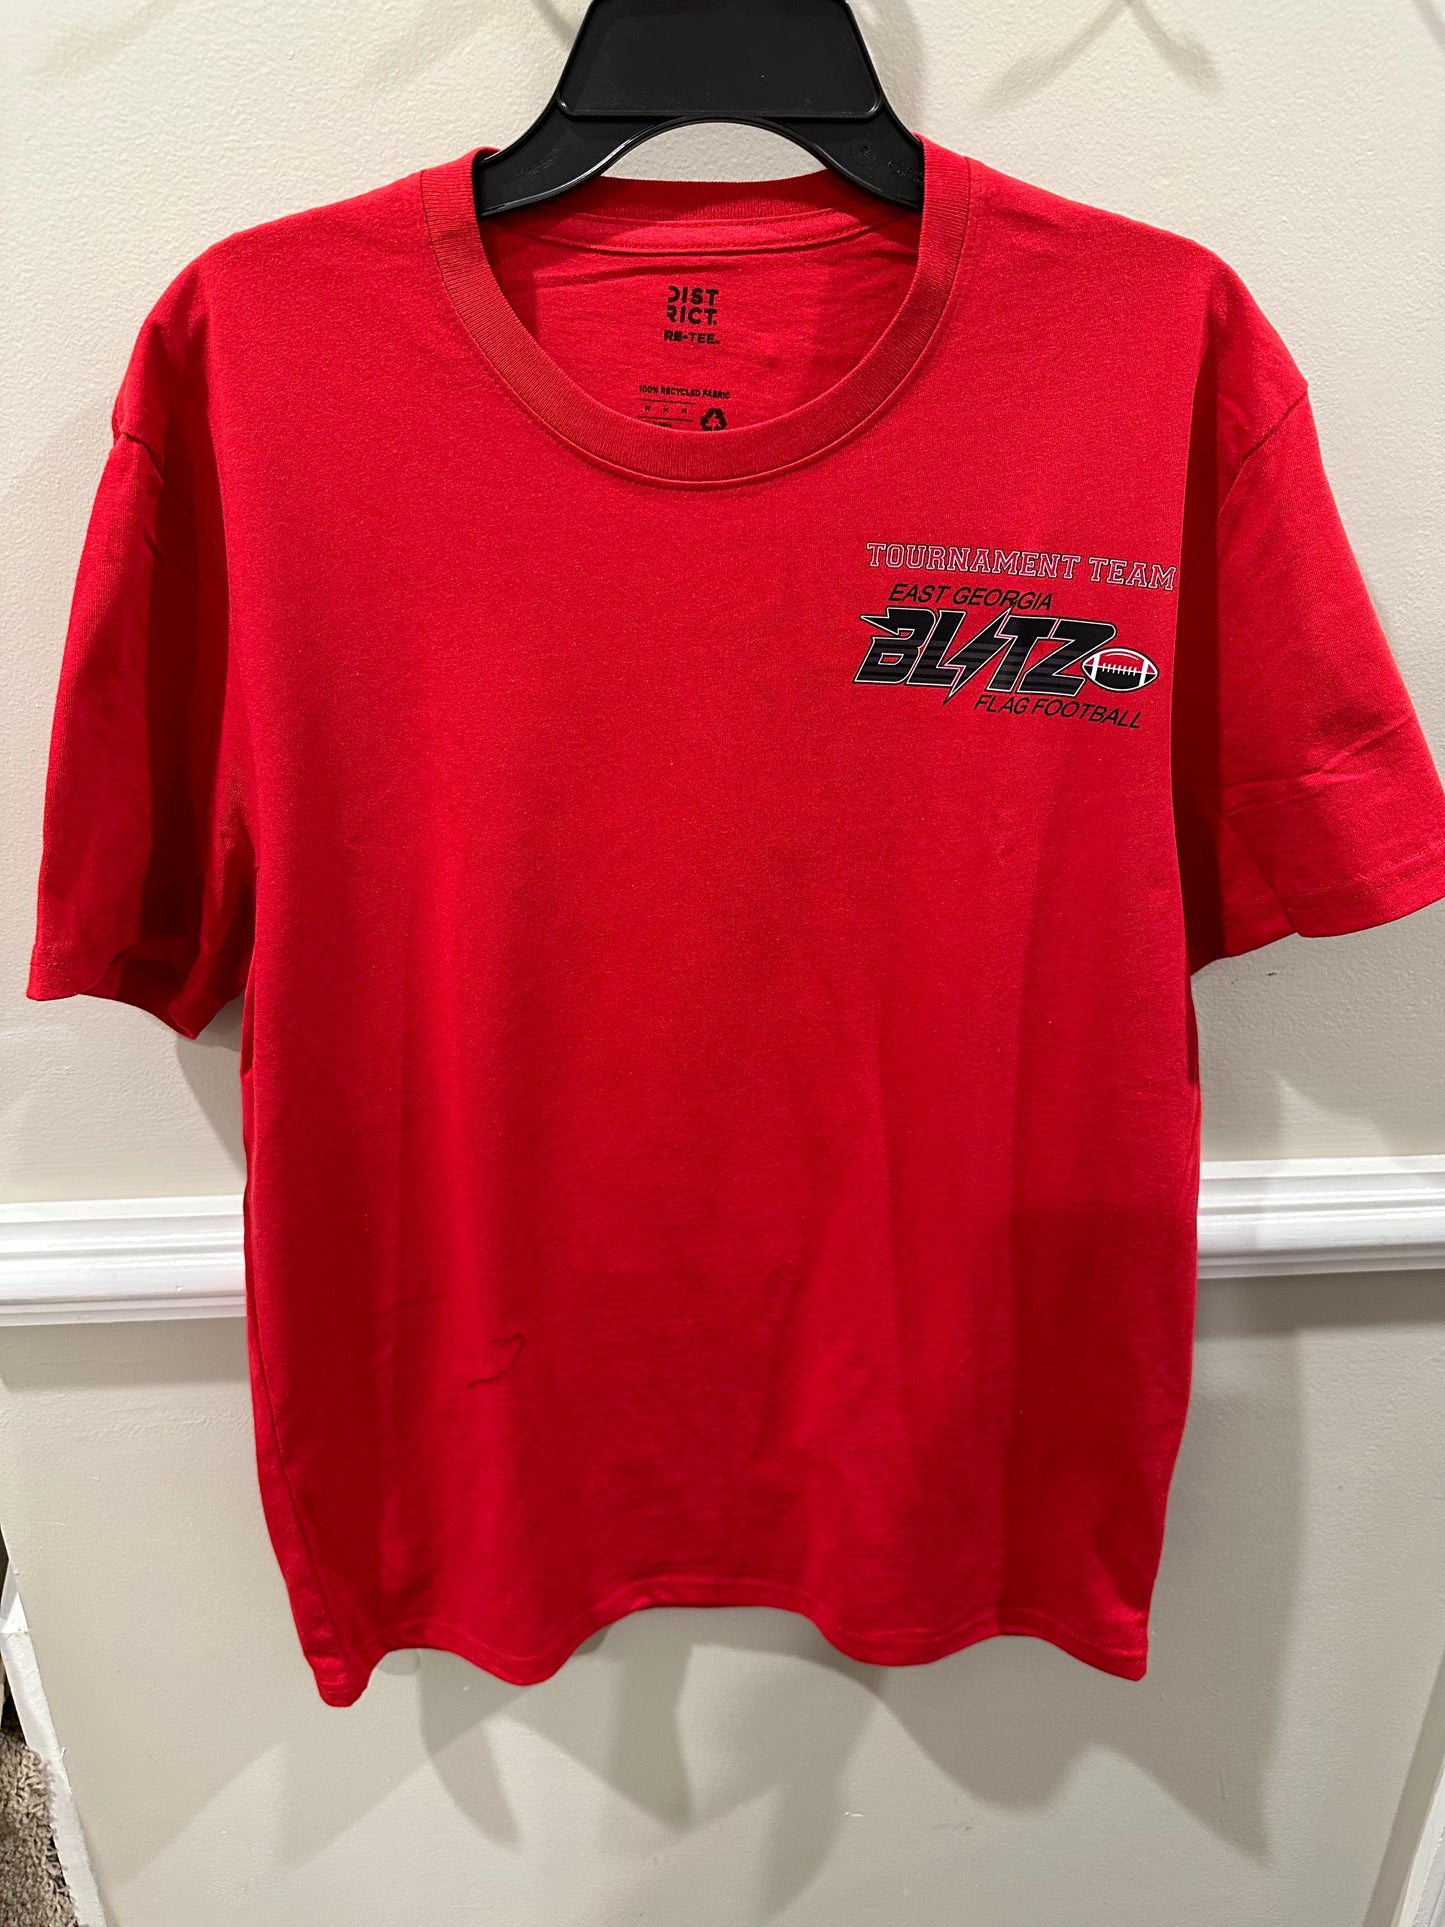 East Ga Blitz Flag Football "Tournament Team"  Youth Short Sleeve T-Shirt